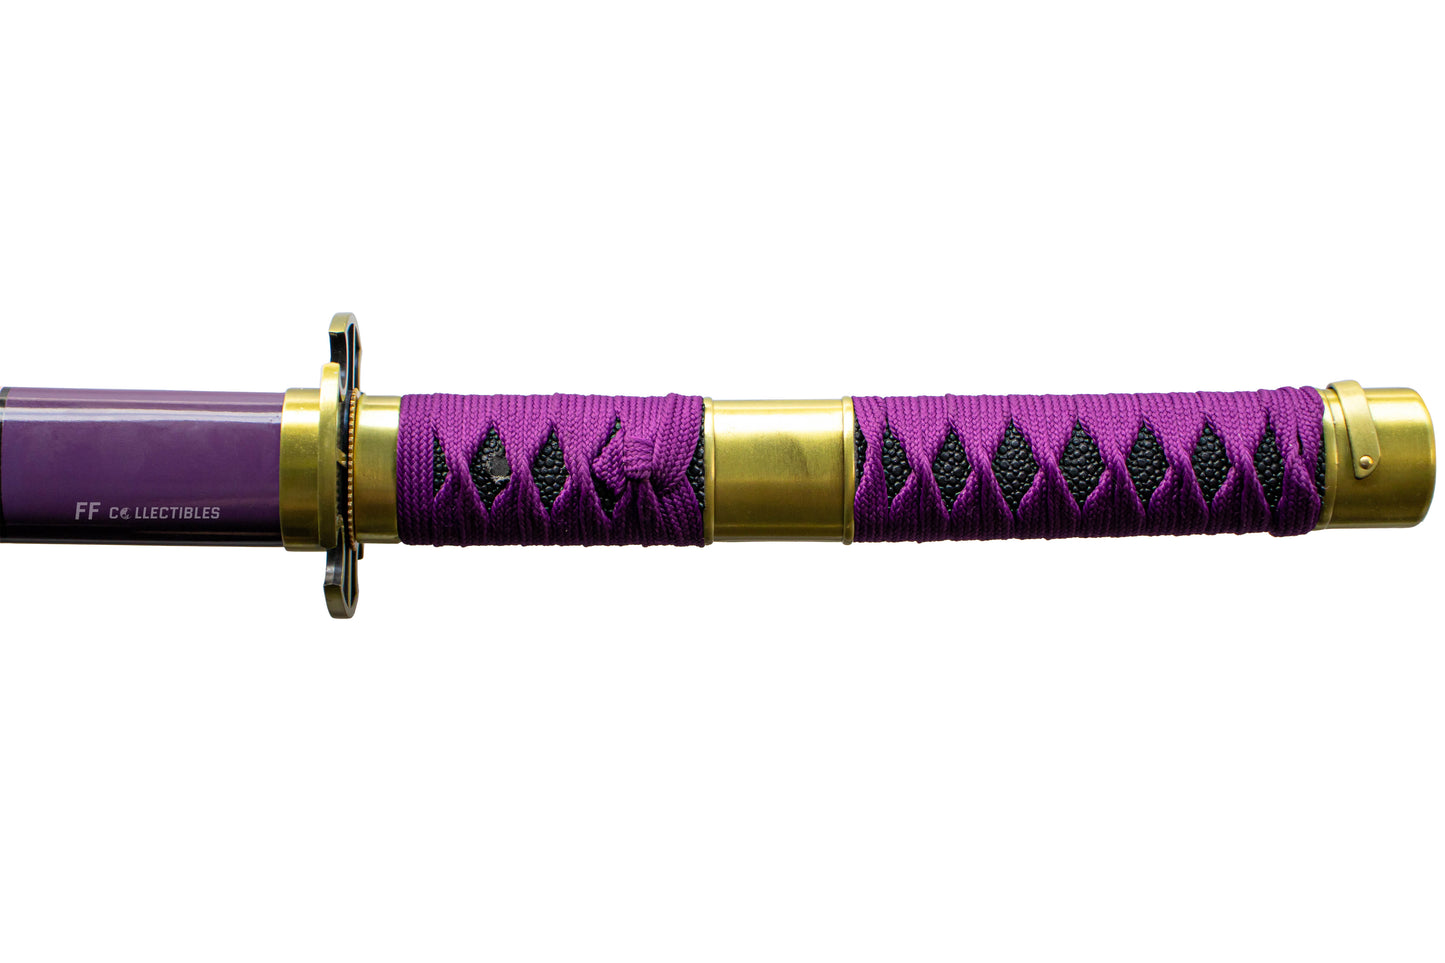 ONE PIECE – NIDAI KITETSU, THE SWORD OF TENGUYAMA HITETSU (w FREE sword stand)